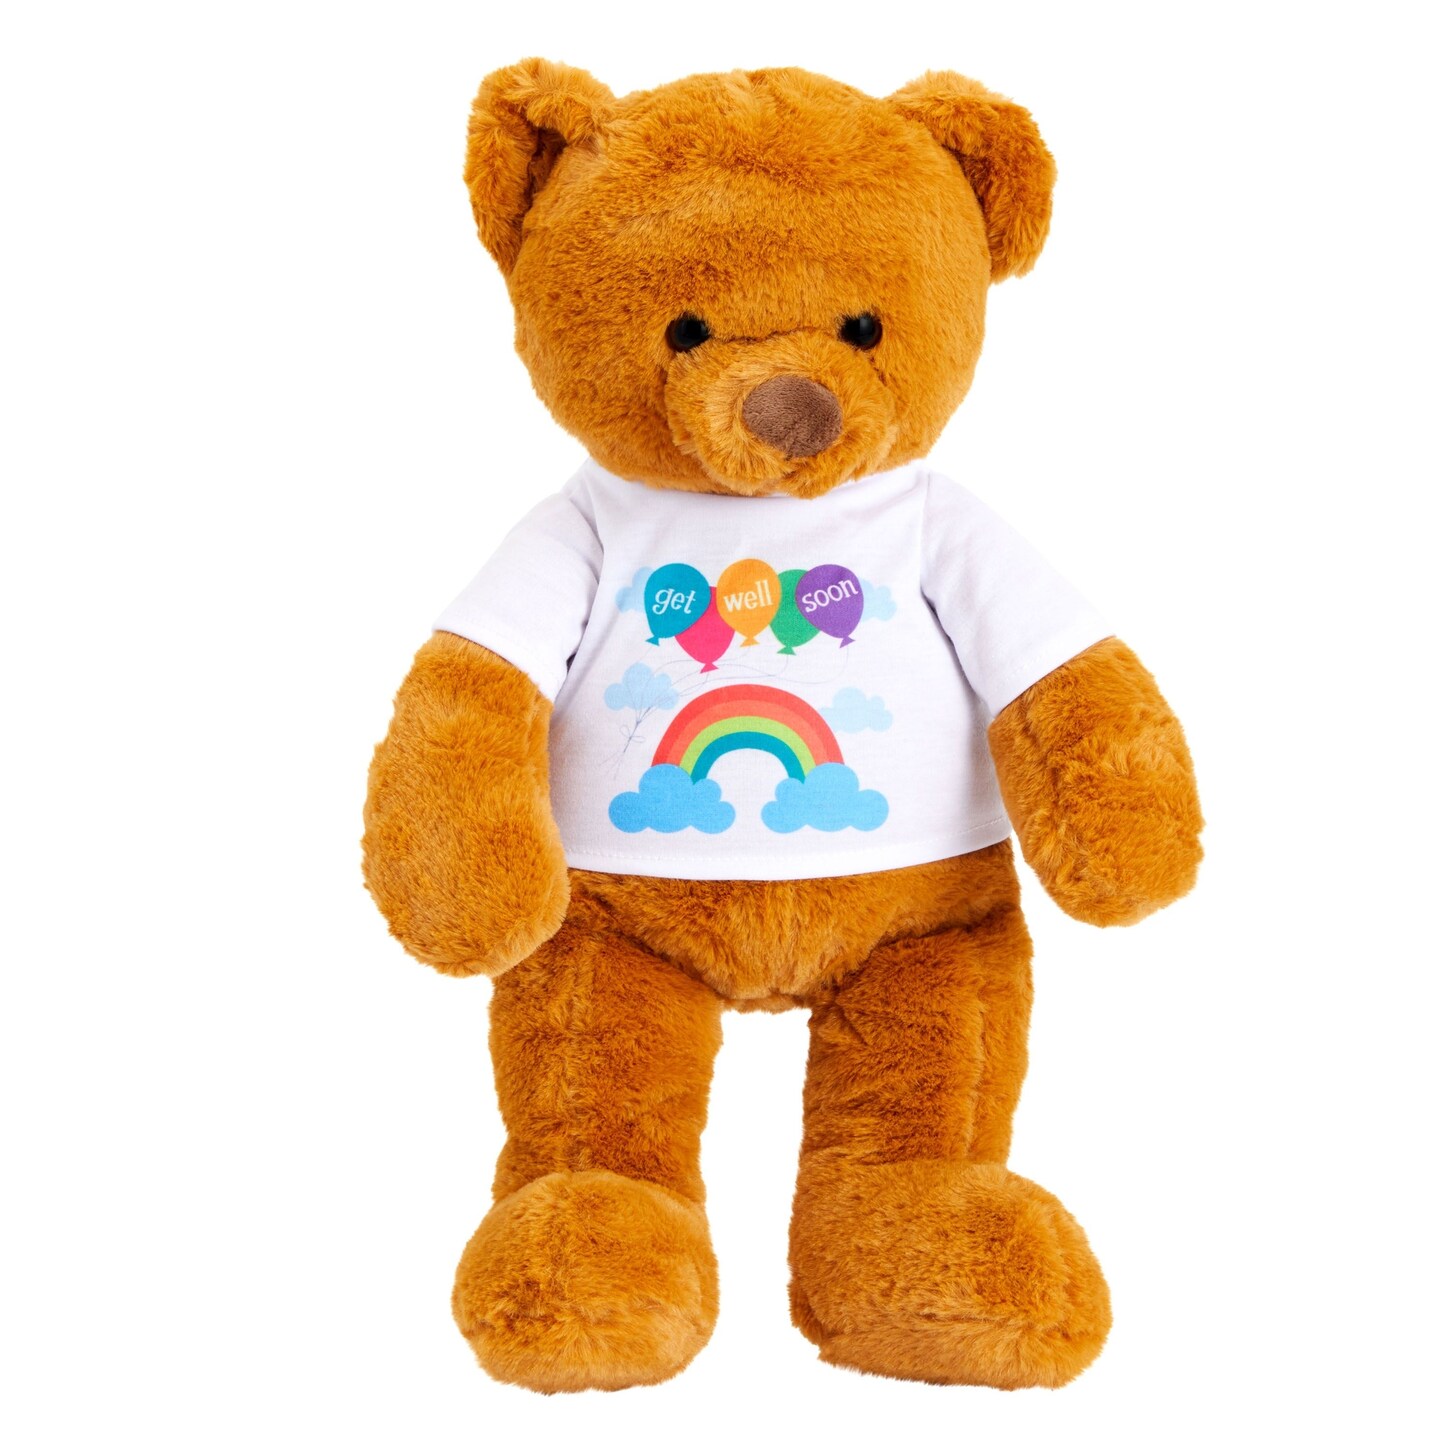 Very cute Sick Teddy Bear. Get well